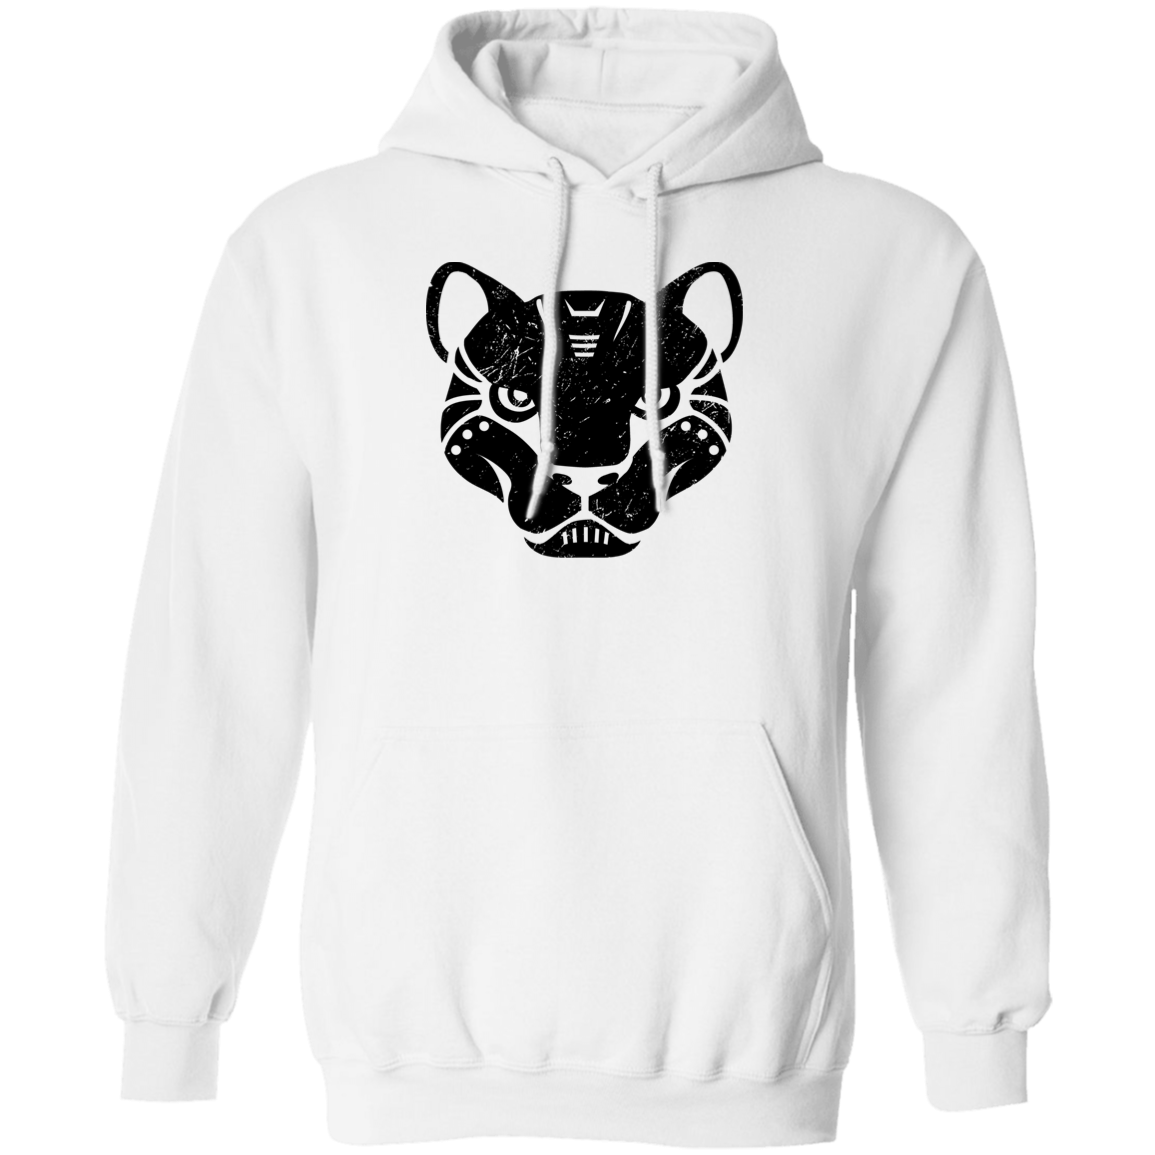 Black Distressed Emblem Hoodies for Adults Panther/Slash)